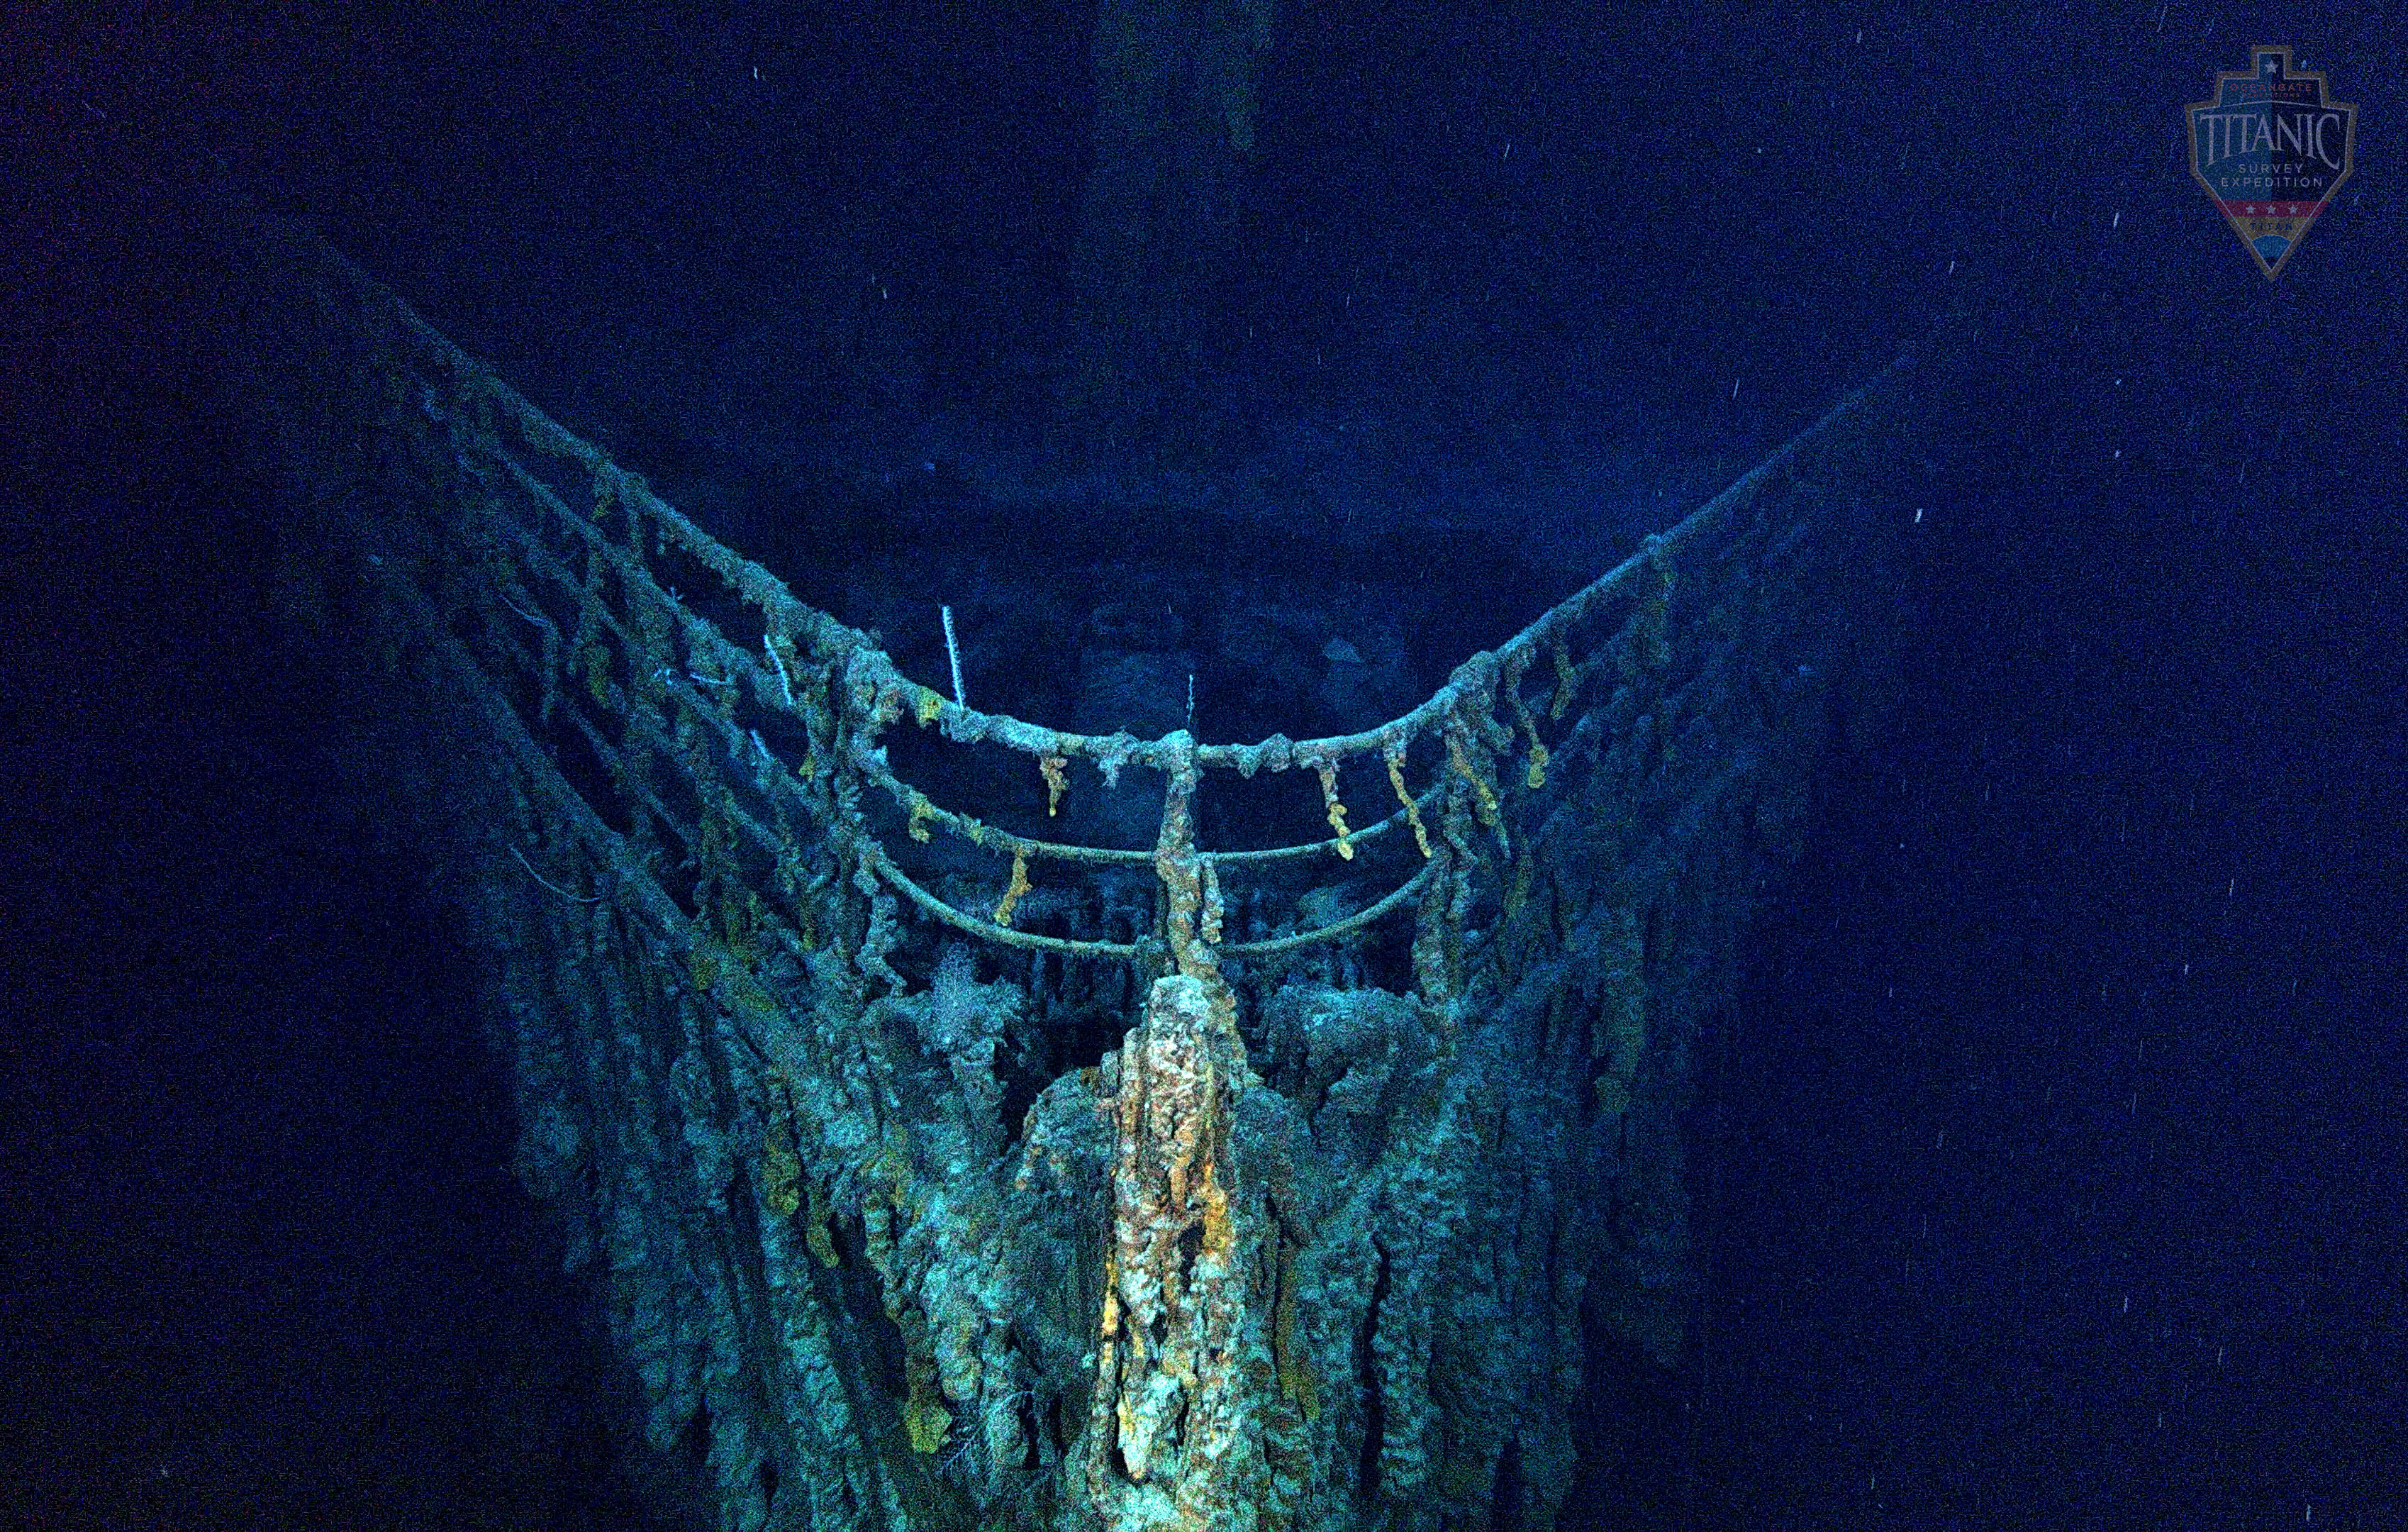 Titanic video: Video of the sunken Titanic